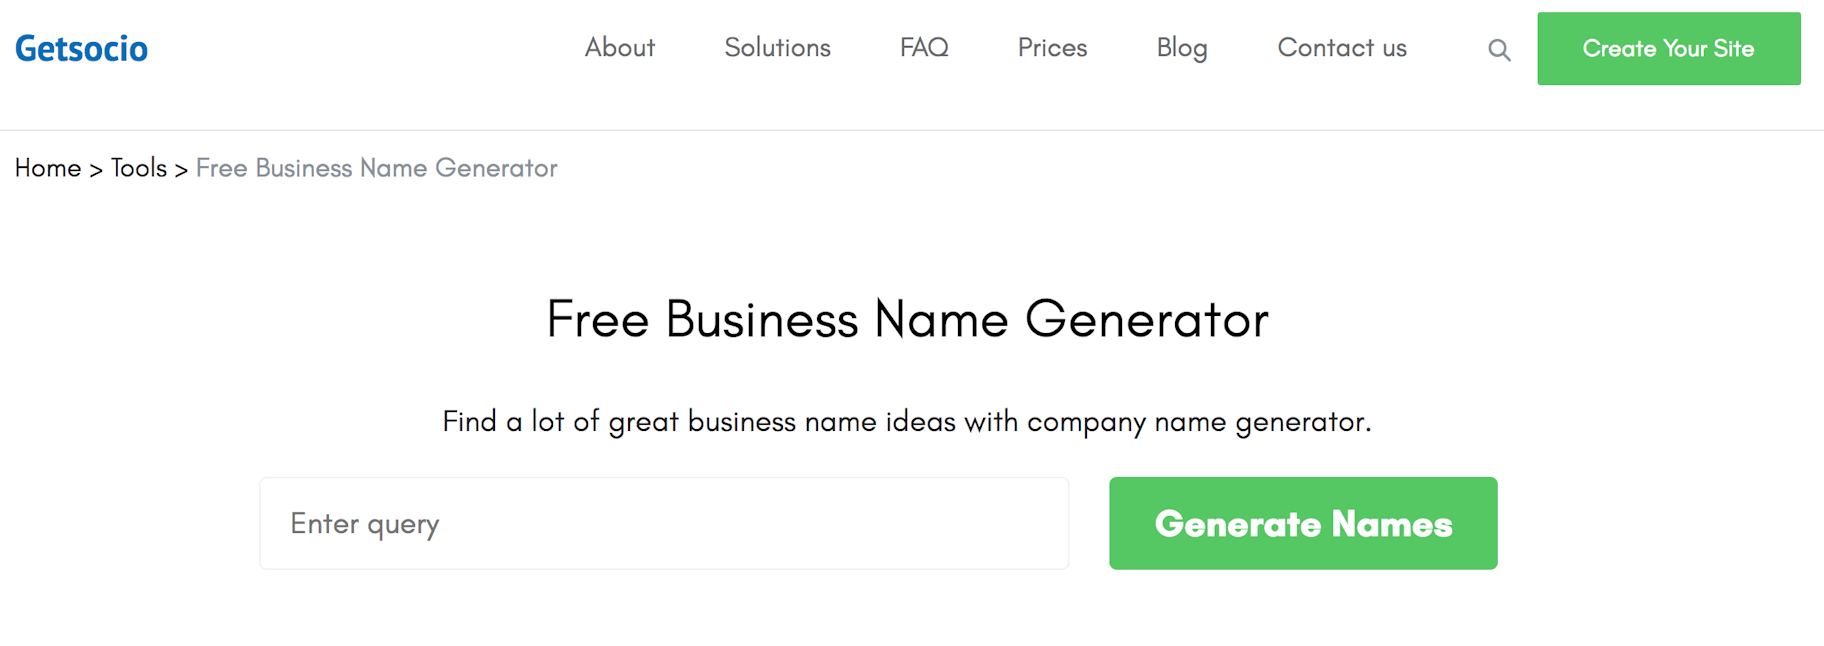 Getsocio Business Name Generator